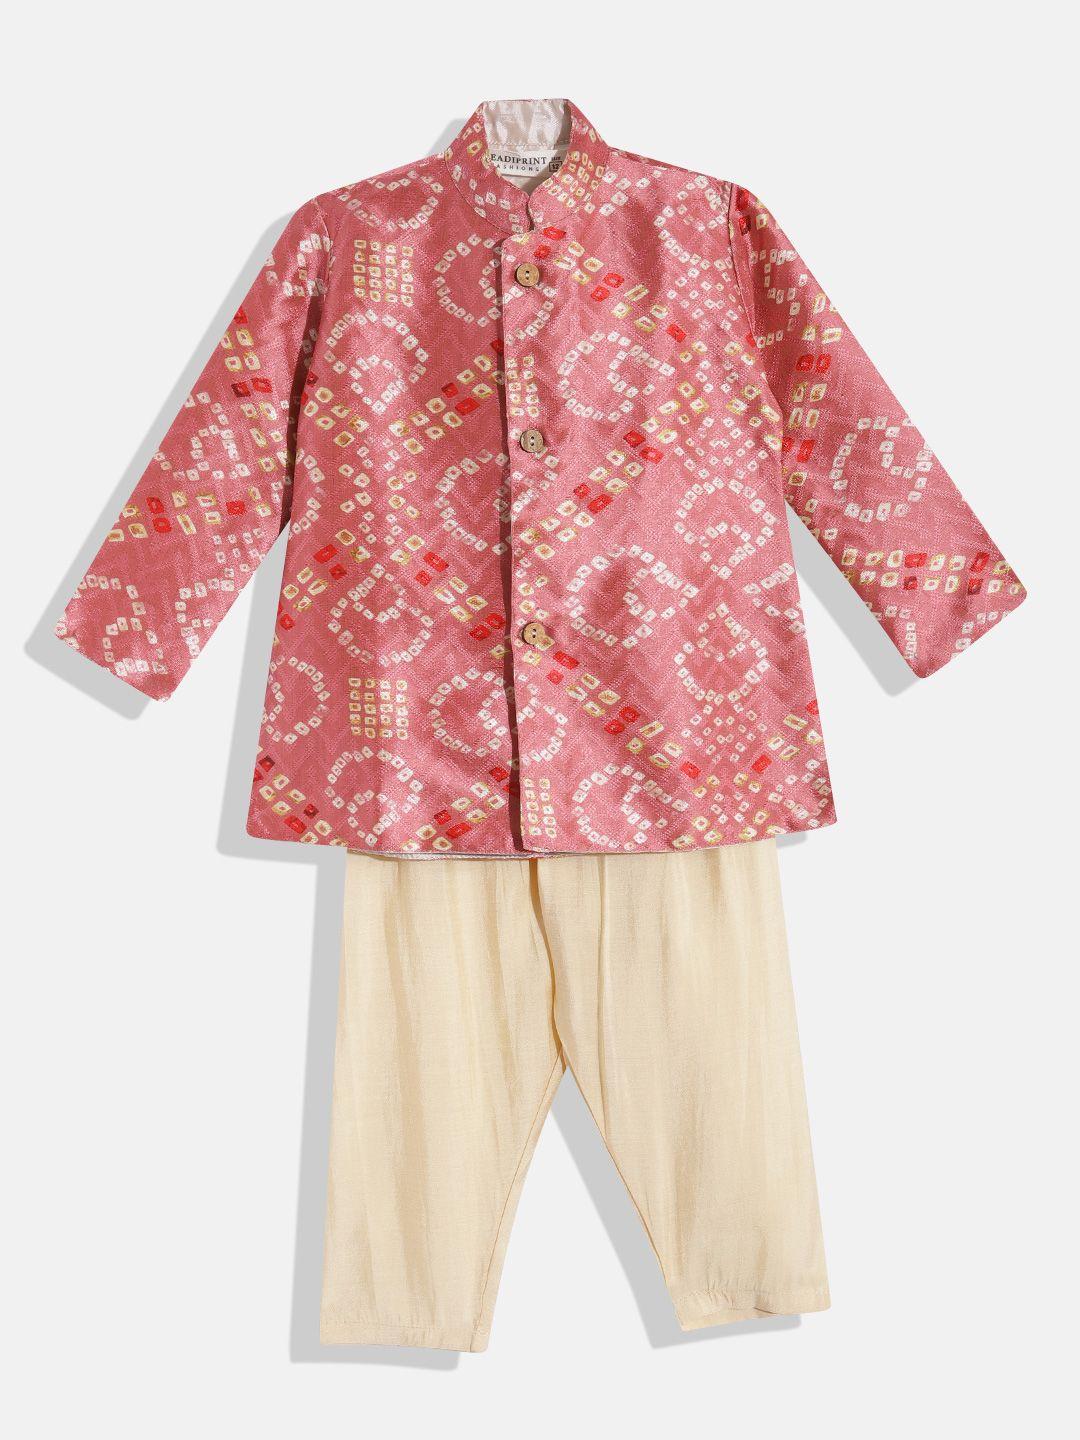 readiprint fashions boys bandhani printed regular kurta with pyjamas